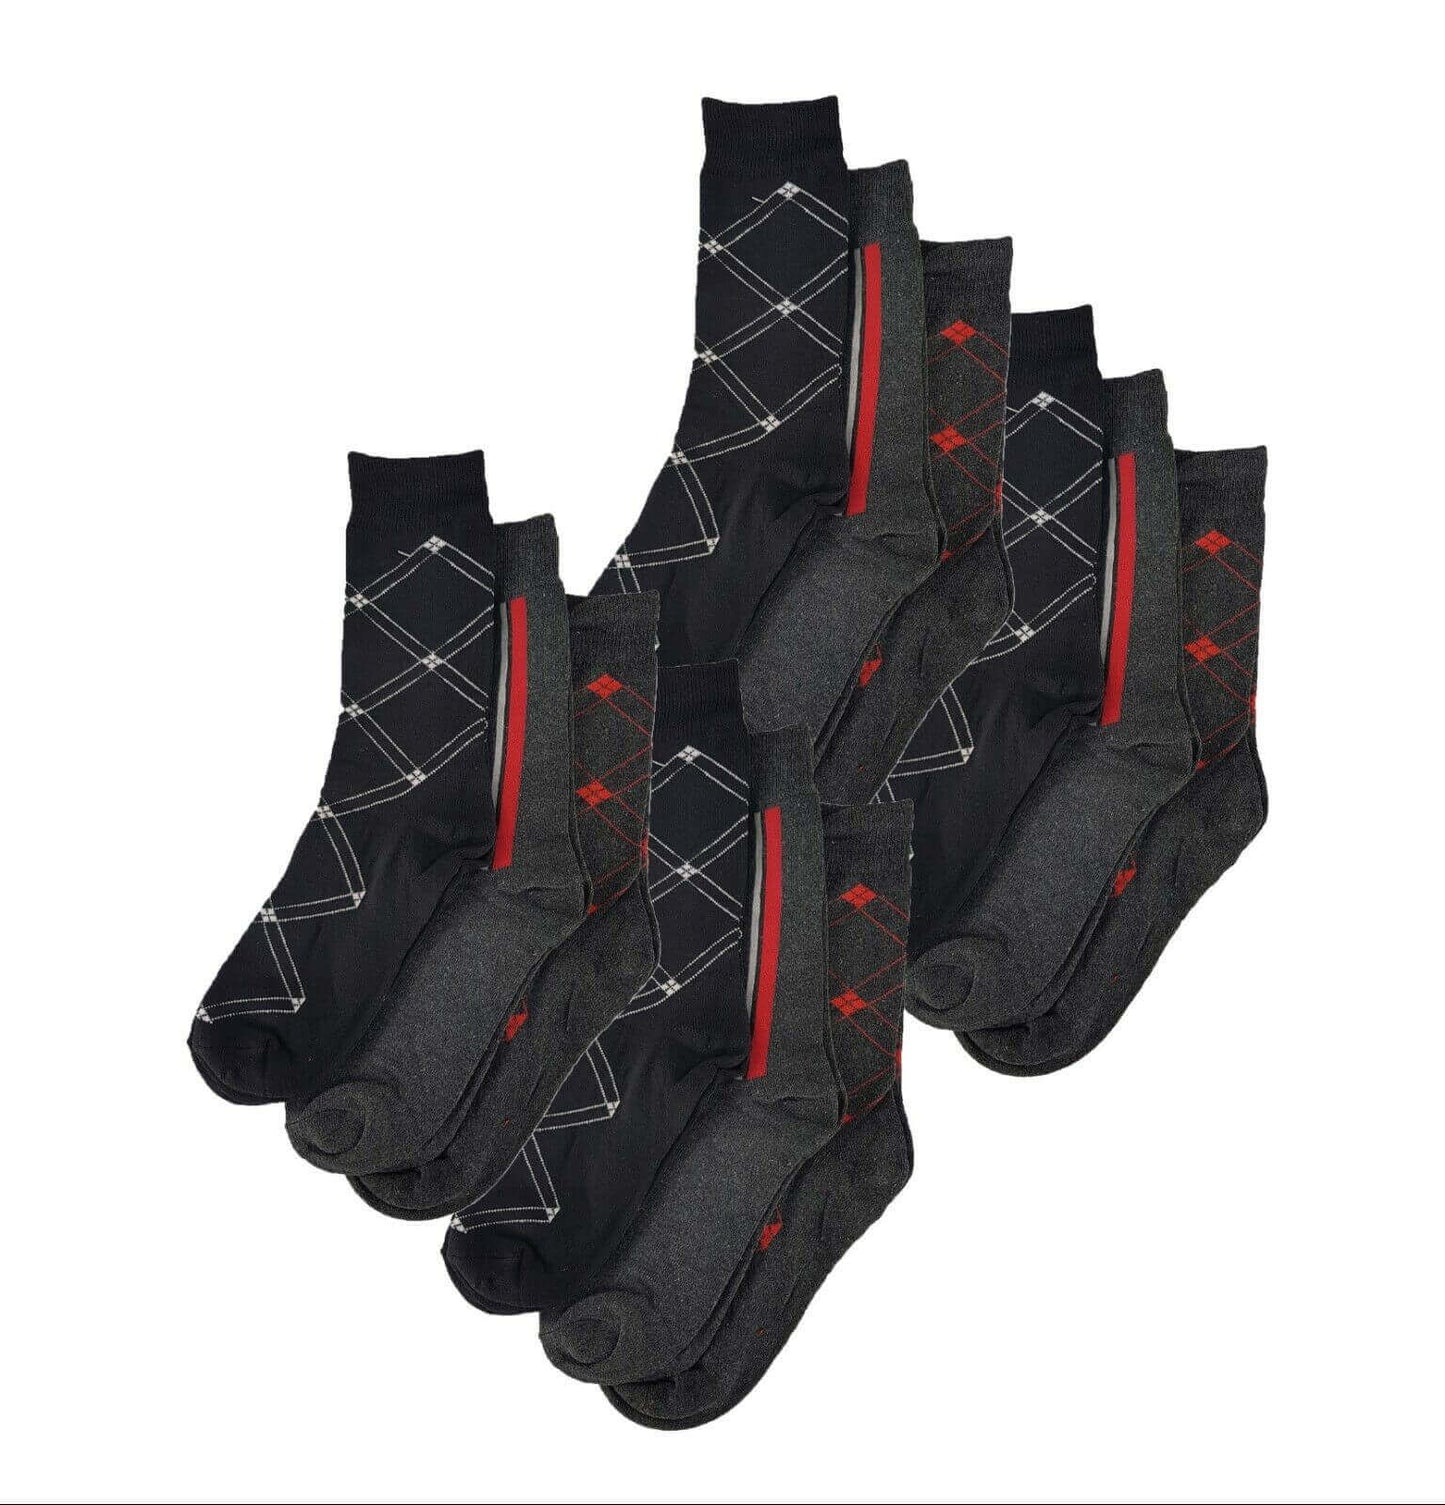 12 Pairs of Men's Designer Socks, Ultimate Formal Shoe Socks, Argyle Stripe Diamond. Buy now for £7.00. A Socks by Sock Stack. 6-11, argyle diamond, assorted, black, boys, casual, comfortable, cotton, dress socks, elastane, formal wear, mens, multi black,